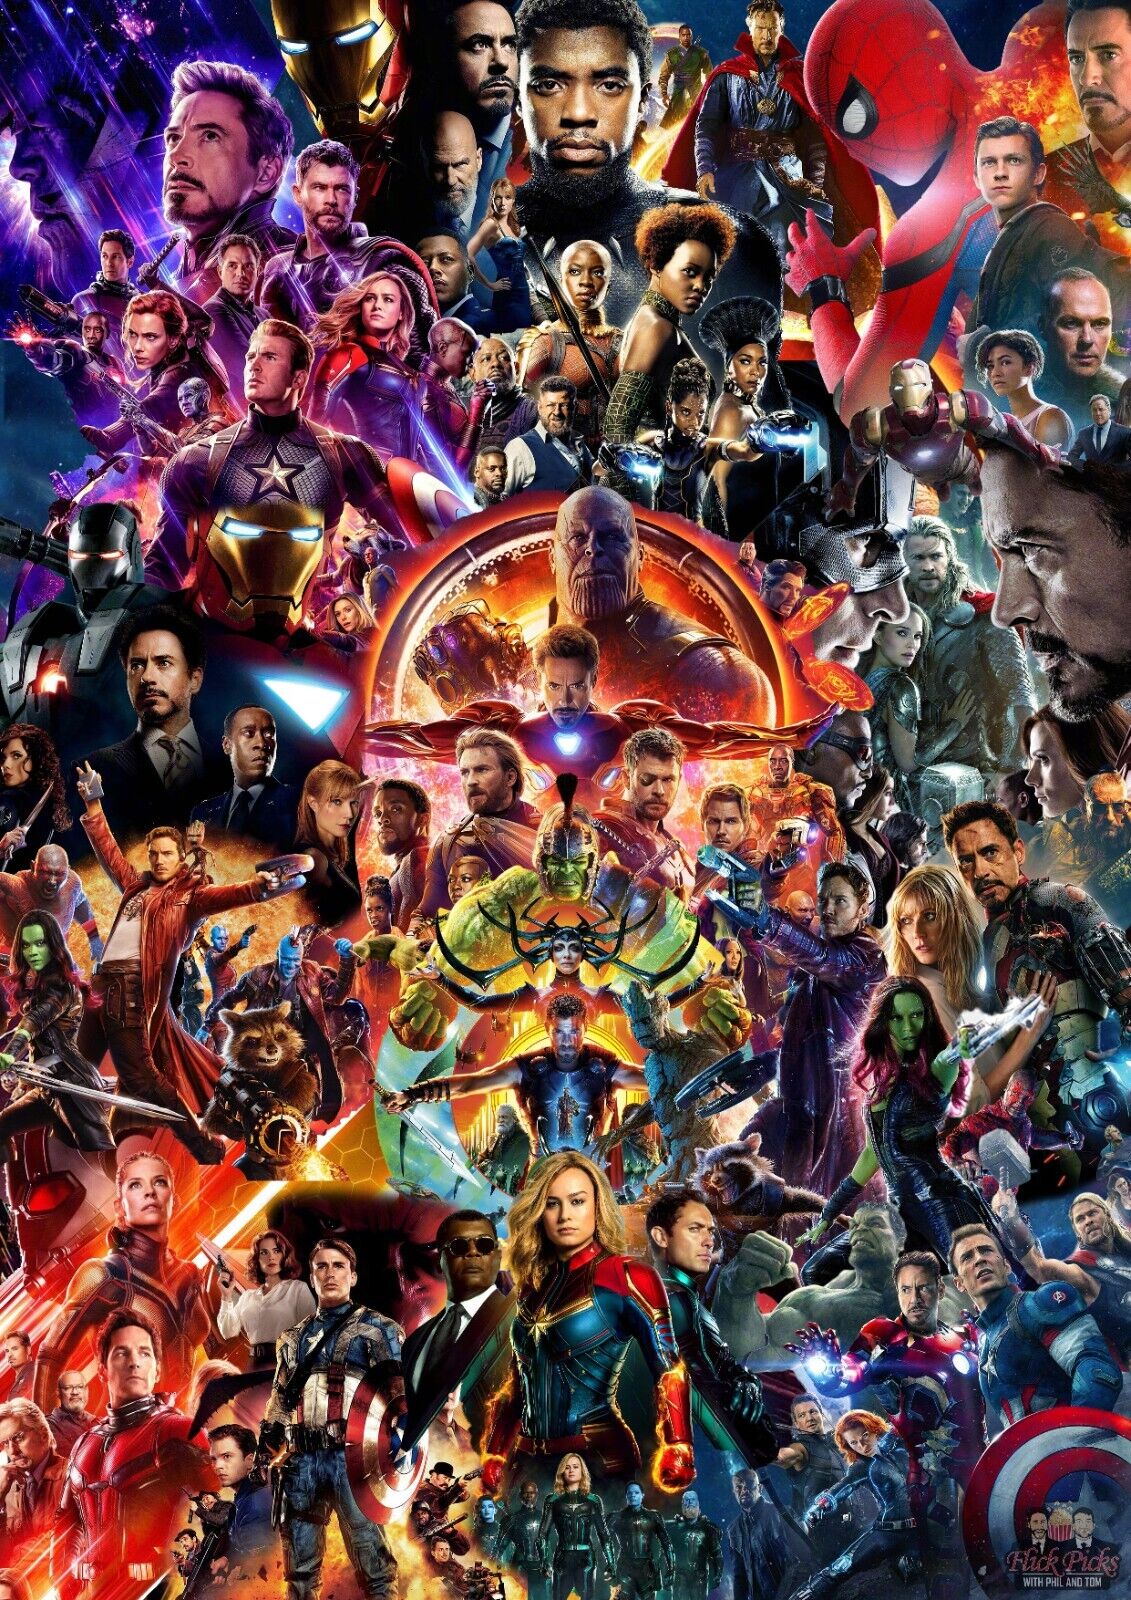 Marvel MCU Avengers Movie Collage Poster Art | eBay